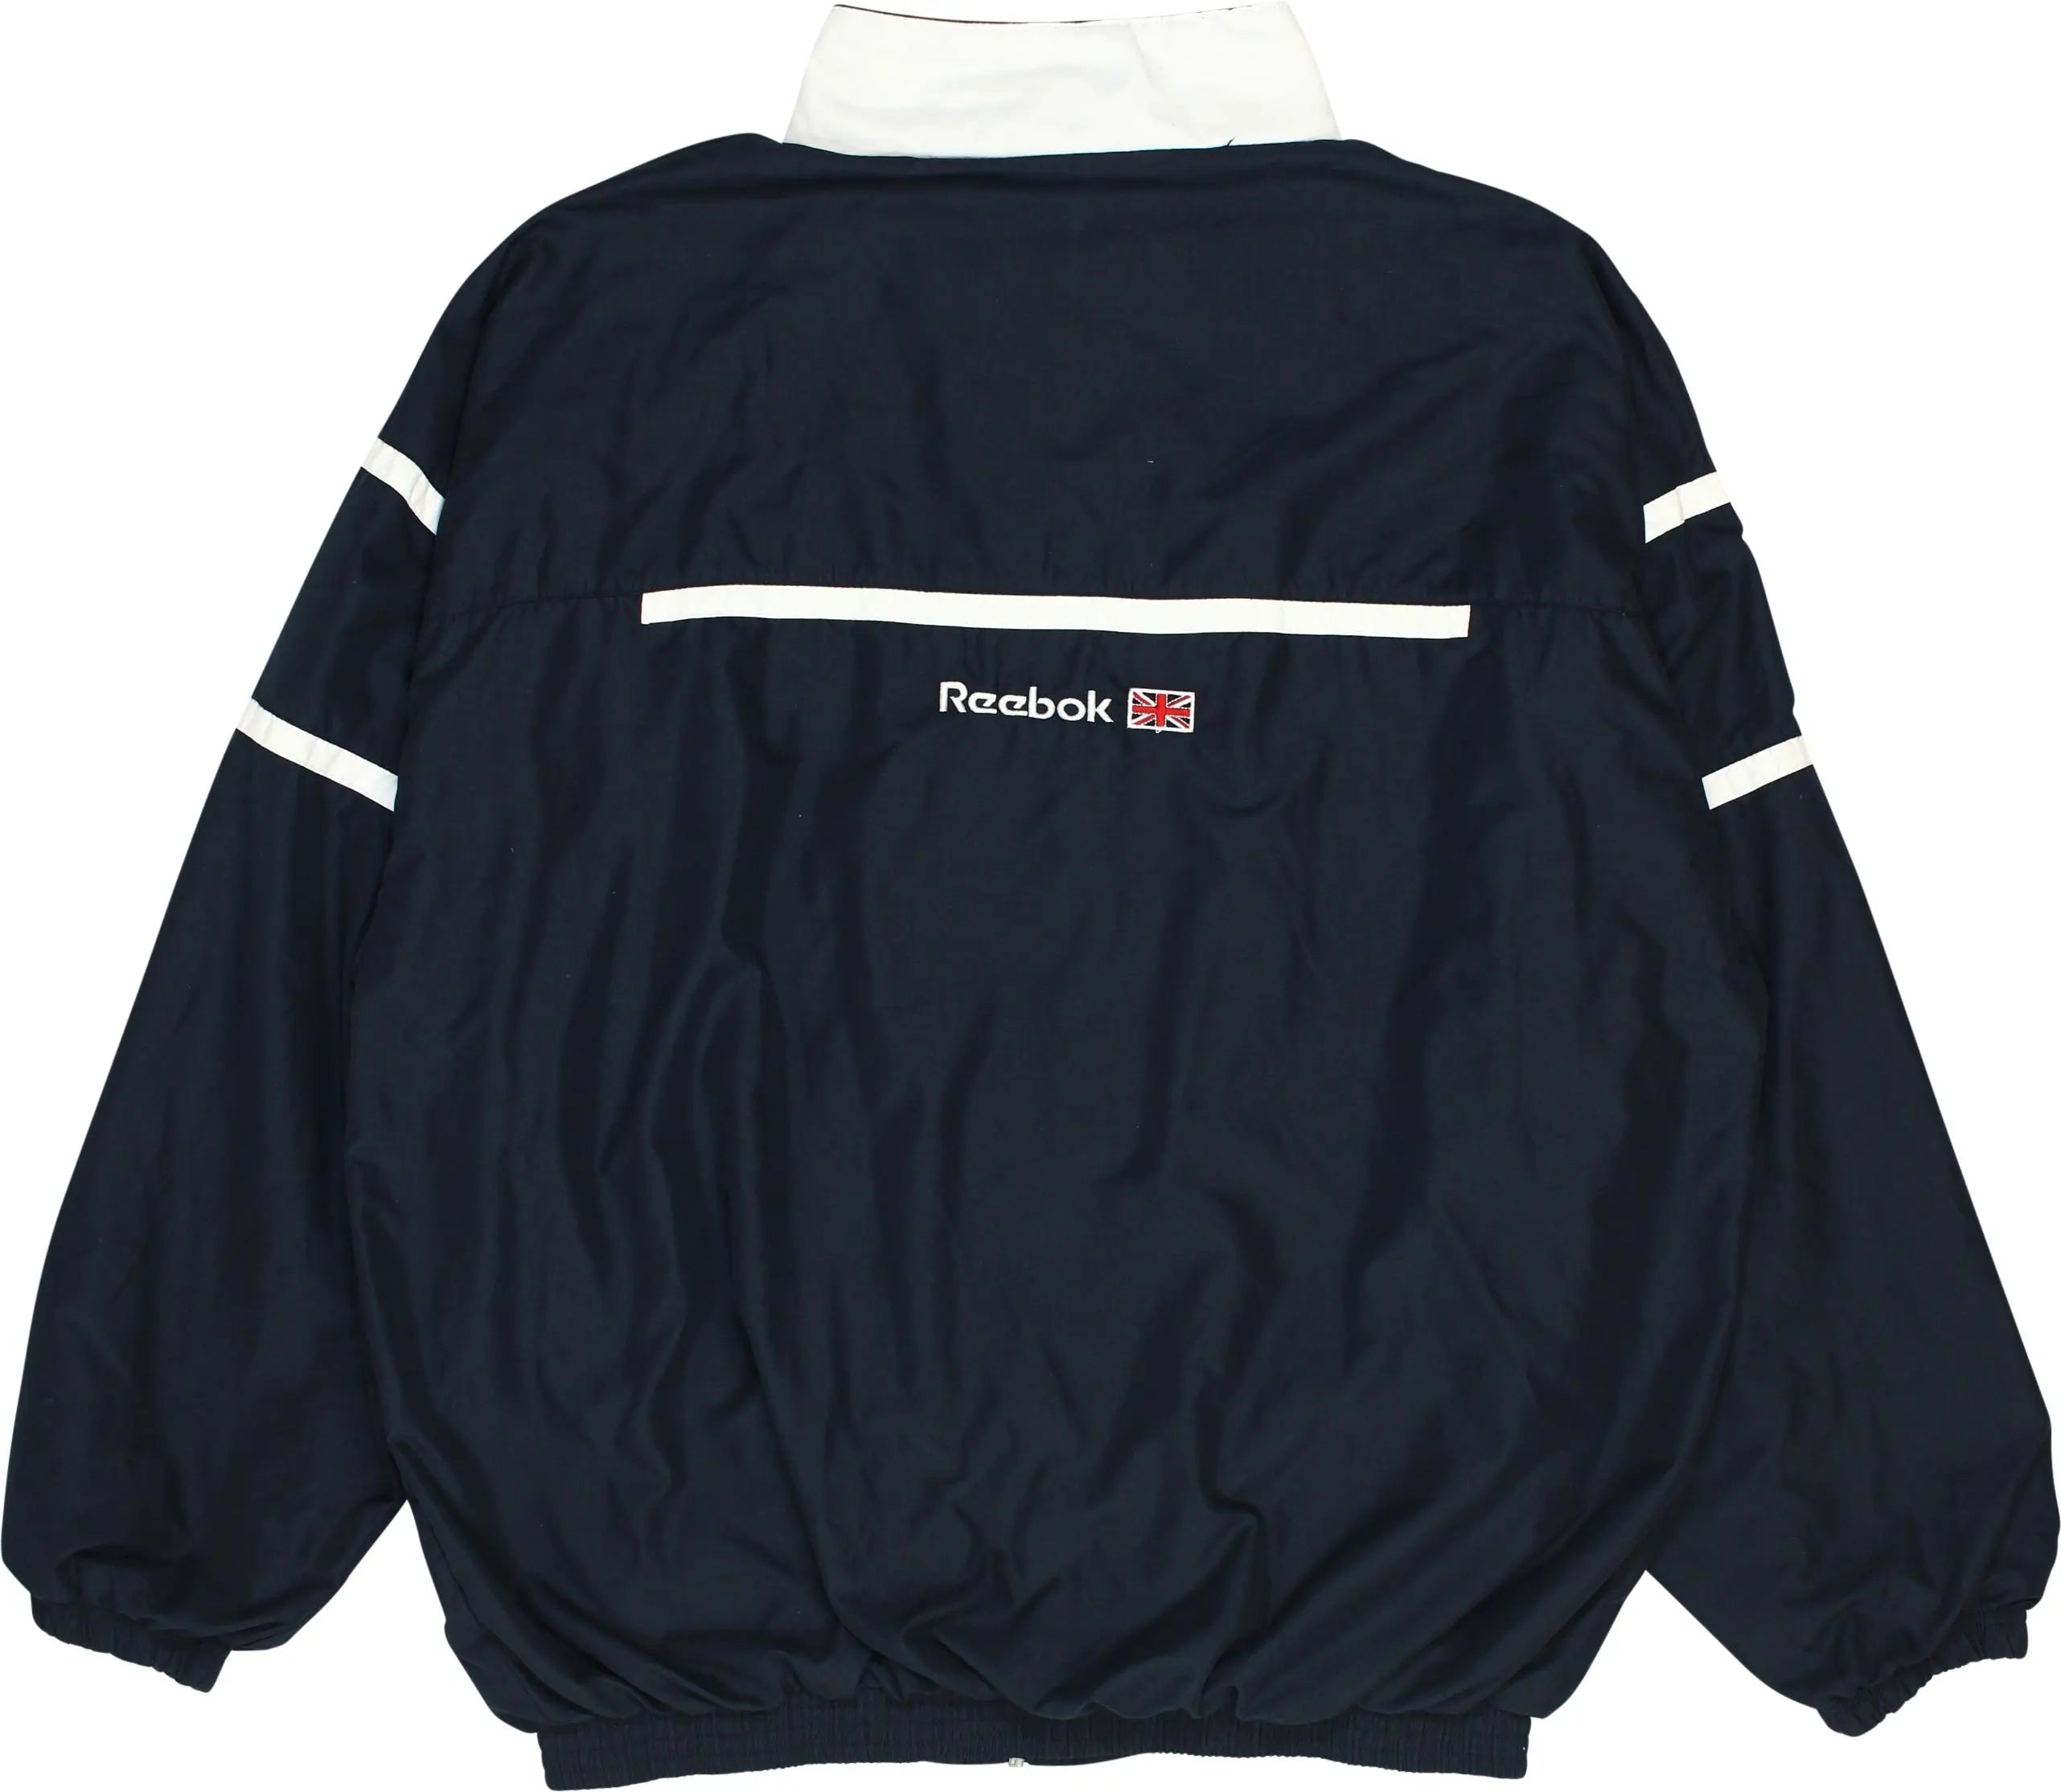 Reebok - 90s Reebok Track Jacket- ThriftTale.com - Vintage and second handclothing